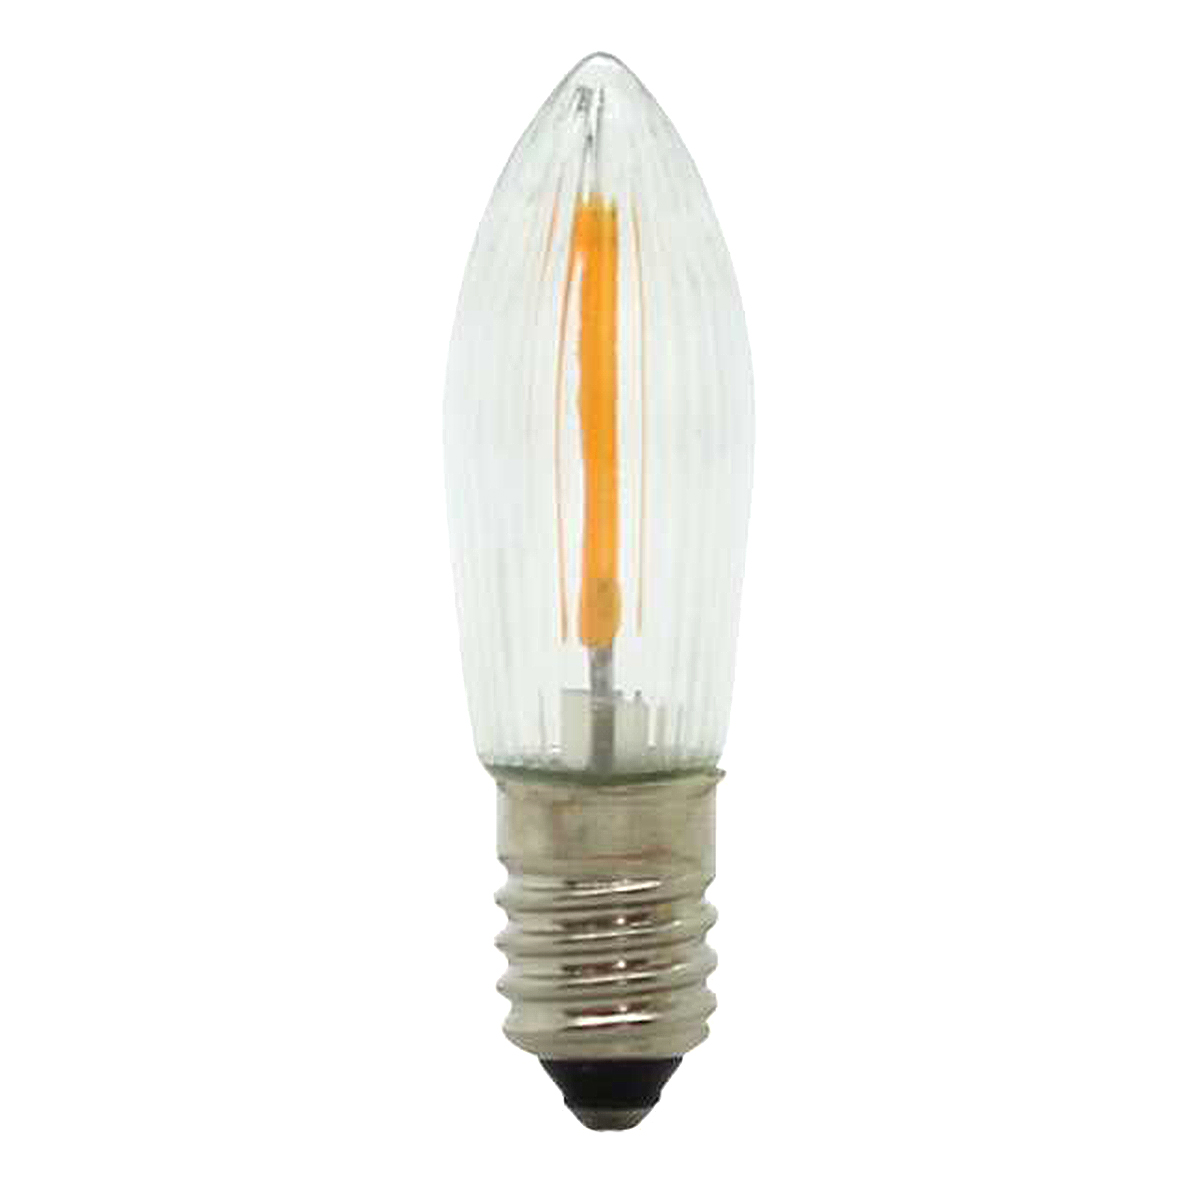 15x LED Schwibbogen Kerzen '8-55Volt' (Filament Topkerzen)